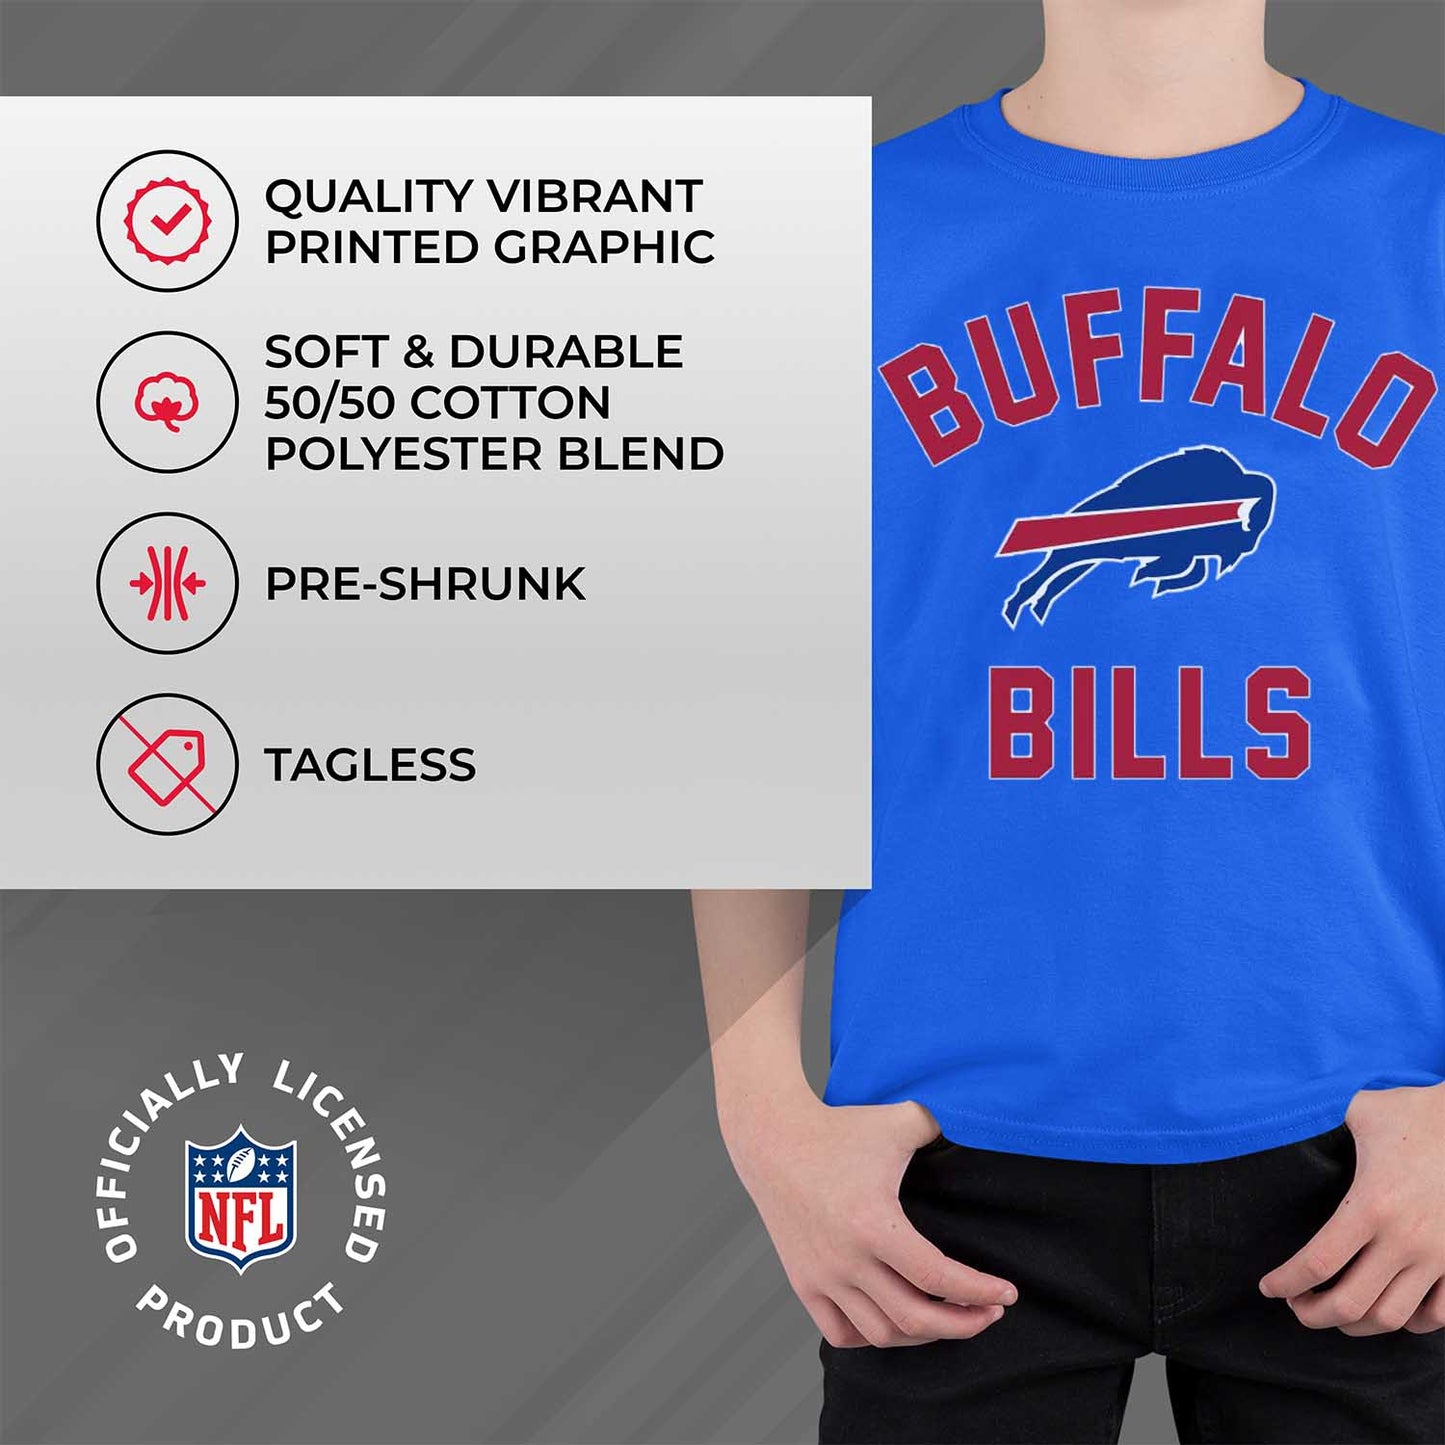 Buffalo Bills NFL Youth Gameday Football T-Shirt - Royal